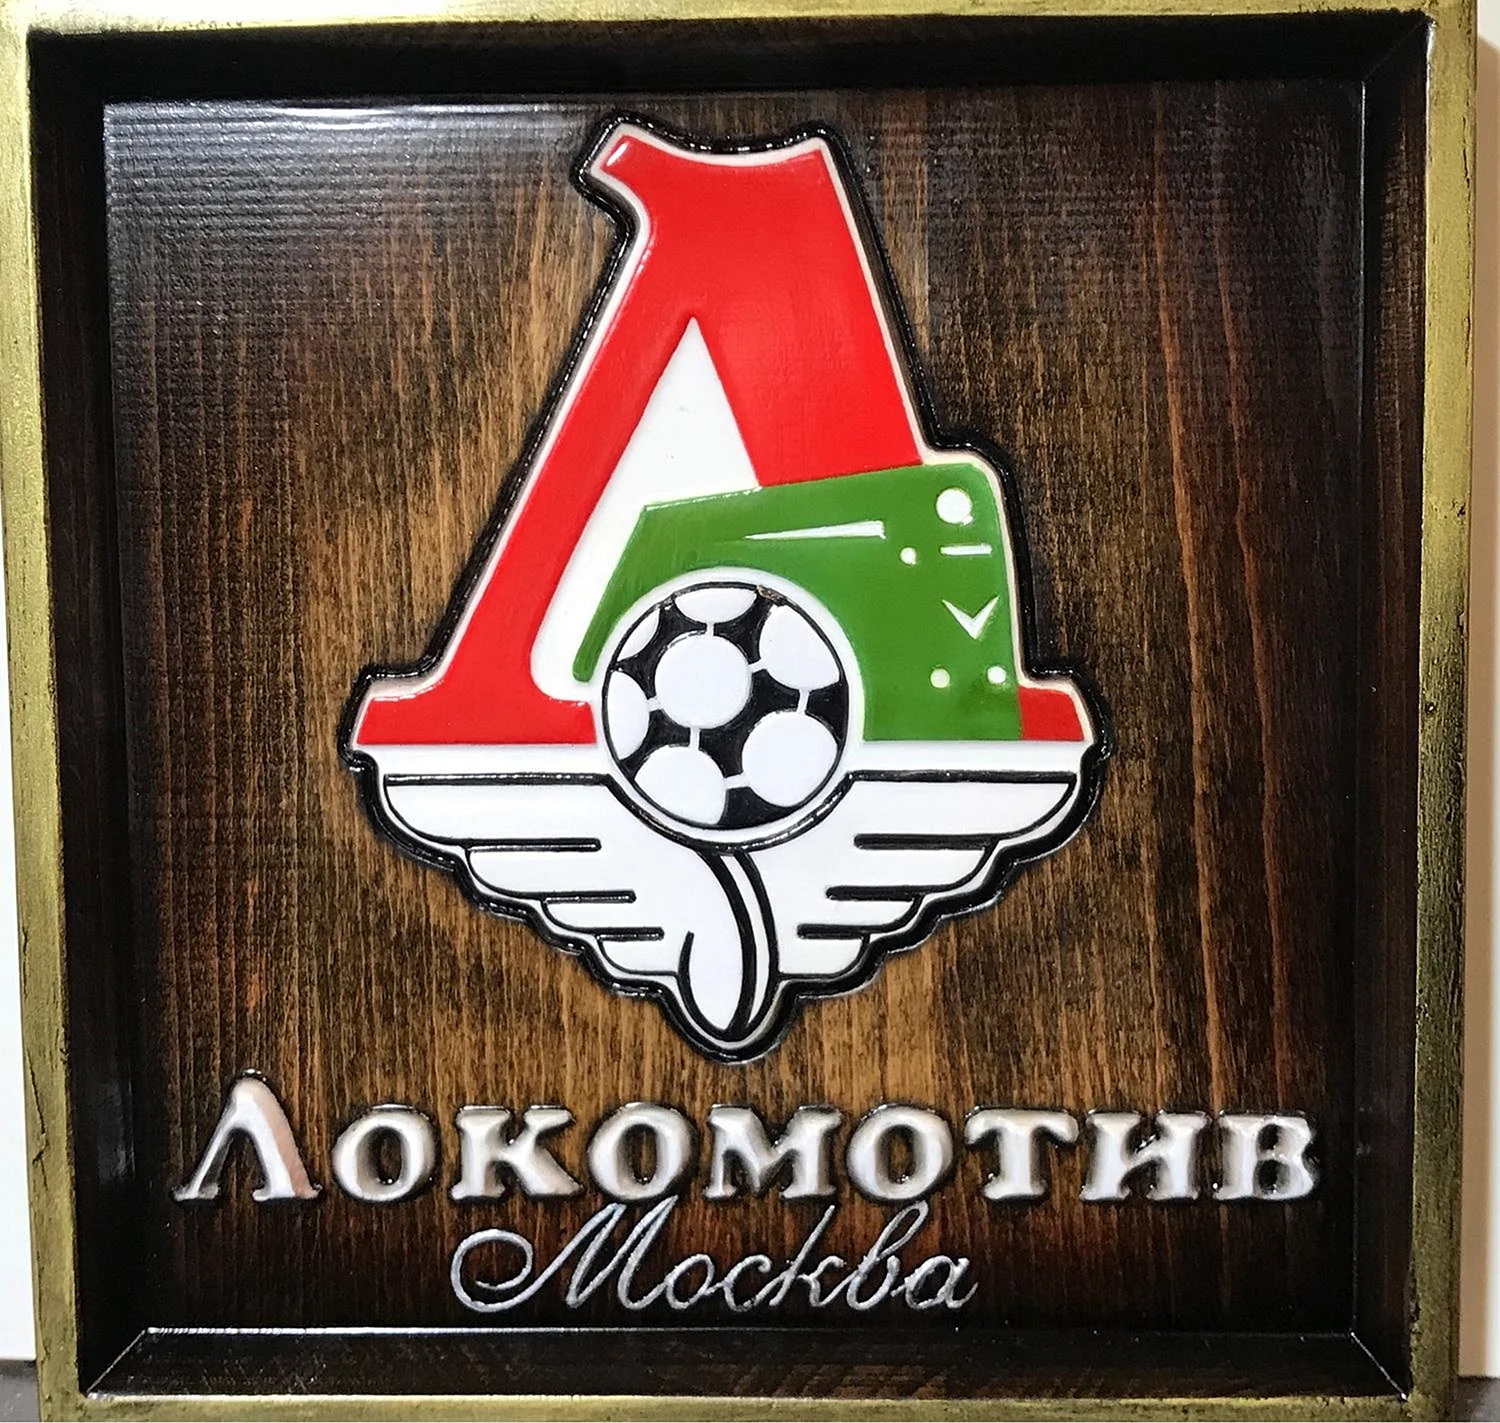 Локомотив Москва логотип